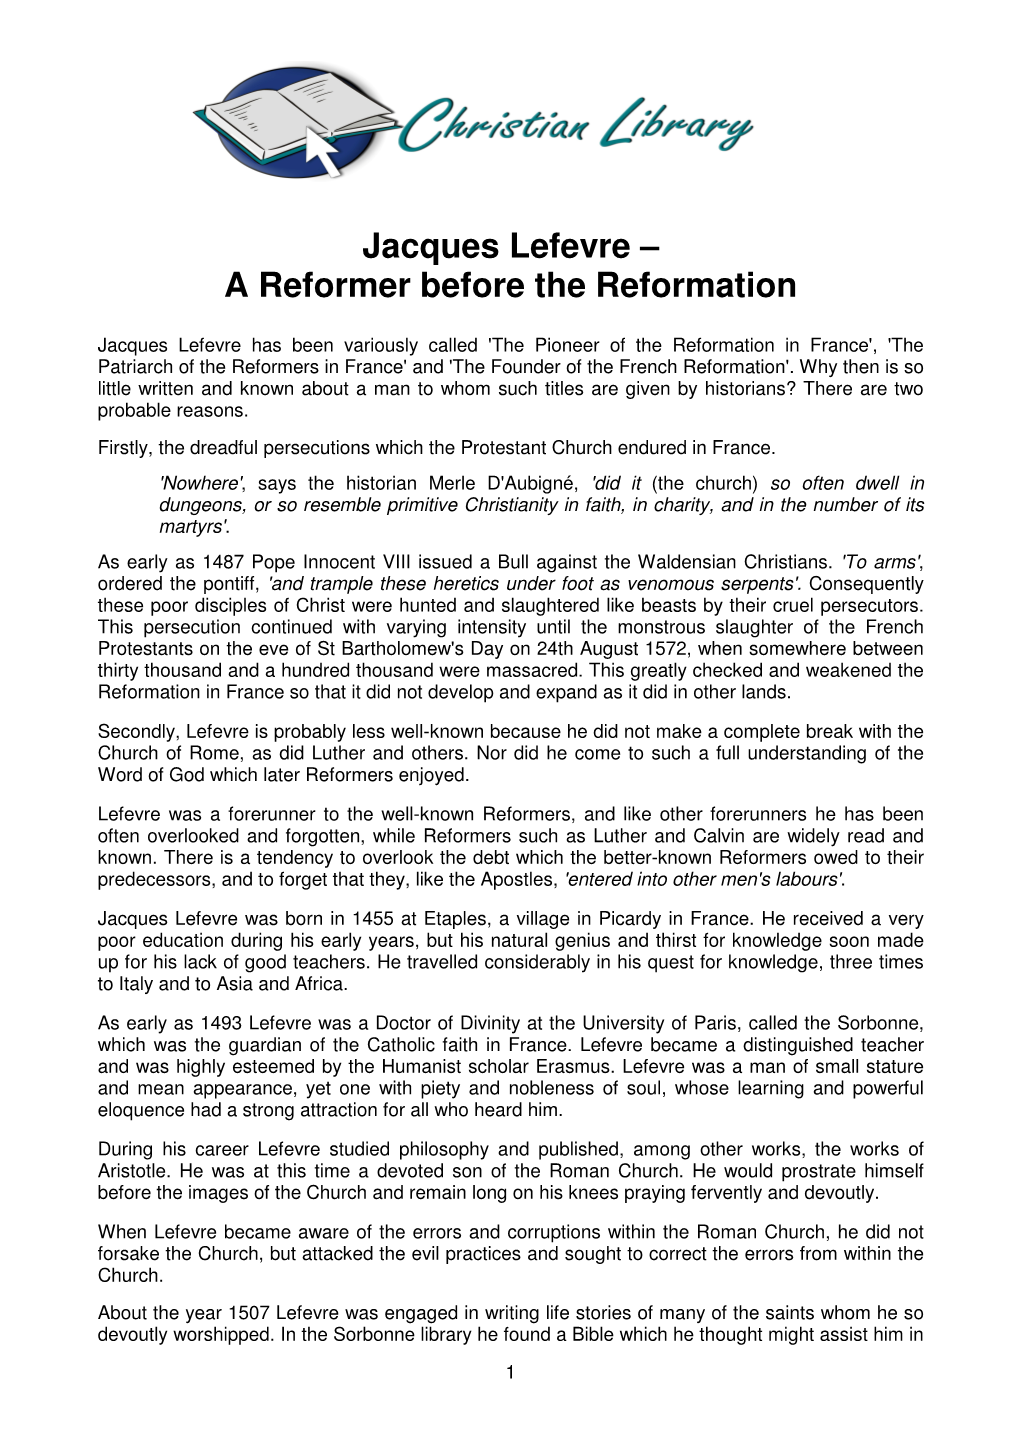 Jacques Lefevre – a Reformer Before the Reformation